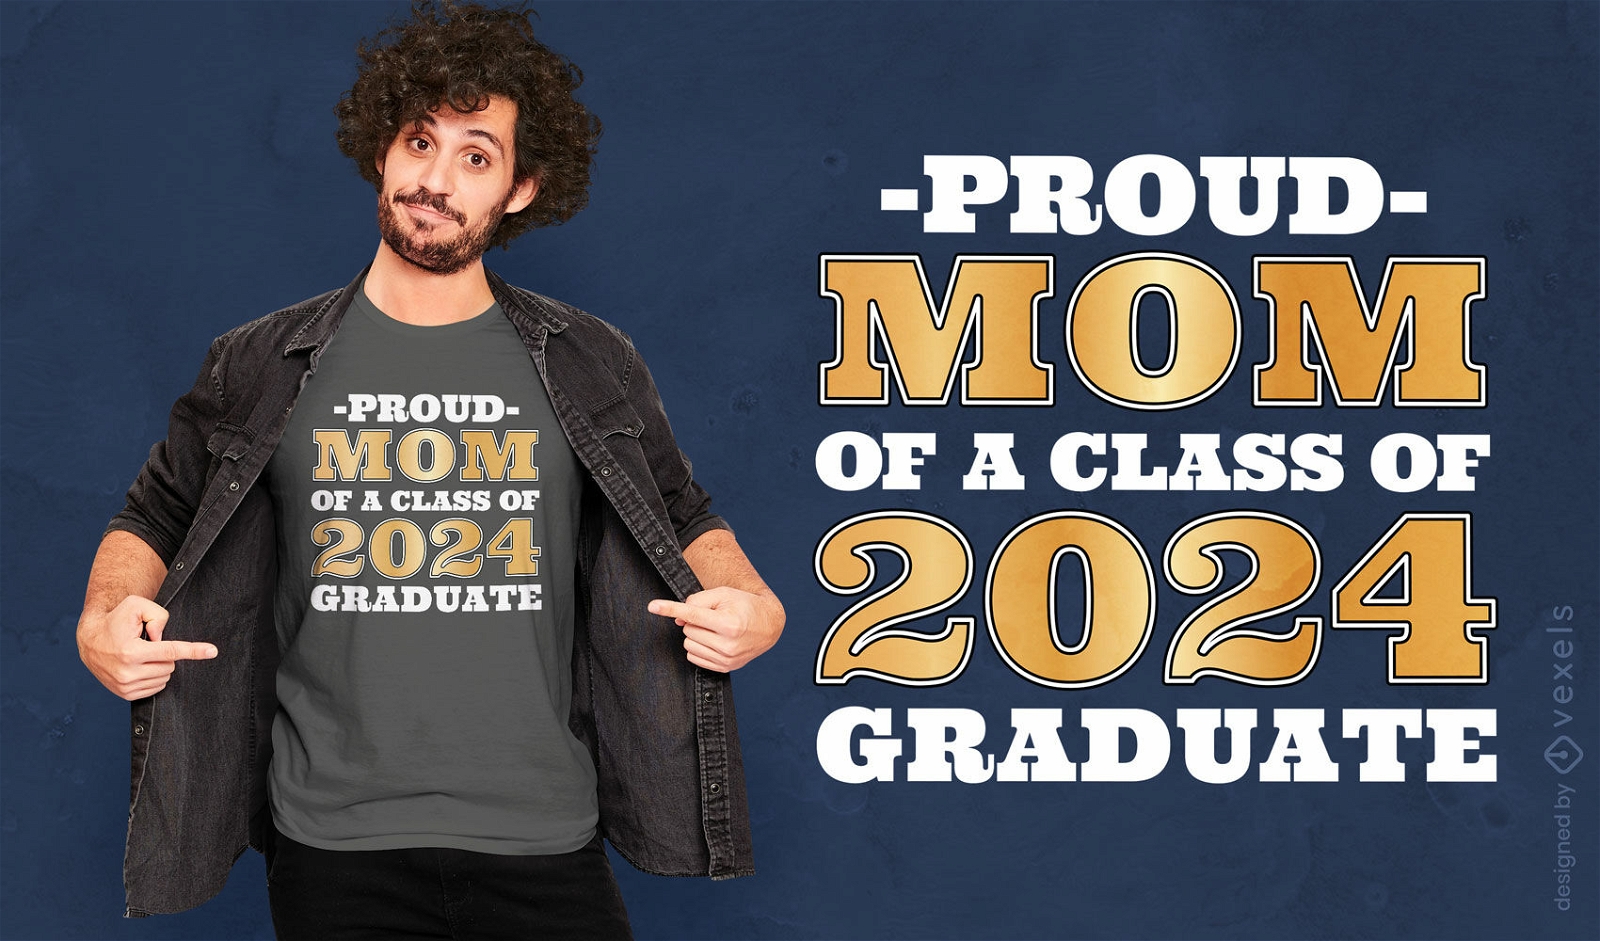 Diseño de camiseta de celebración de mamá de graduación.